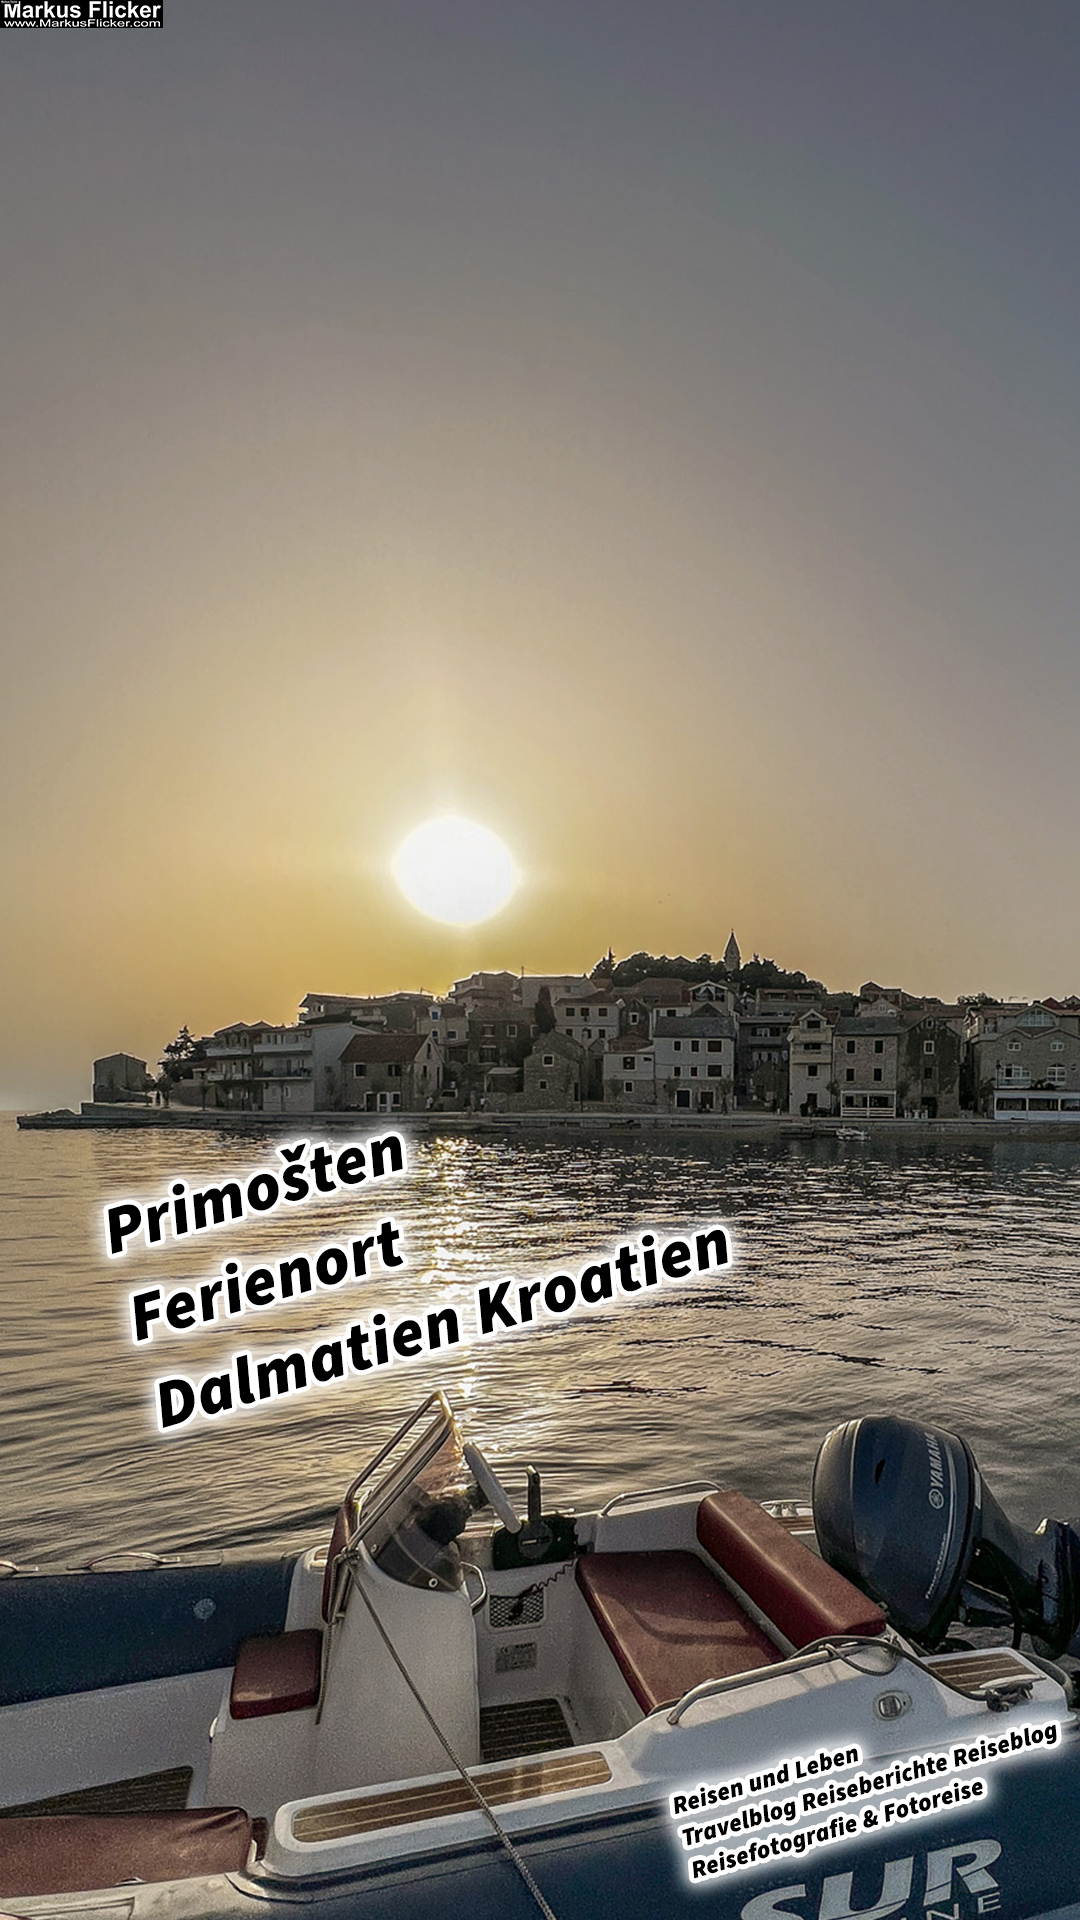 Primošten Ferienort Dalmatien Kroatien #visitcroatia #visitprimosten